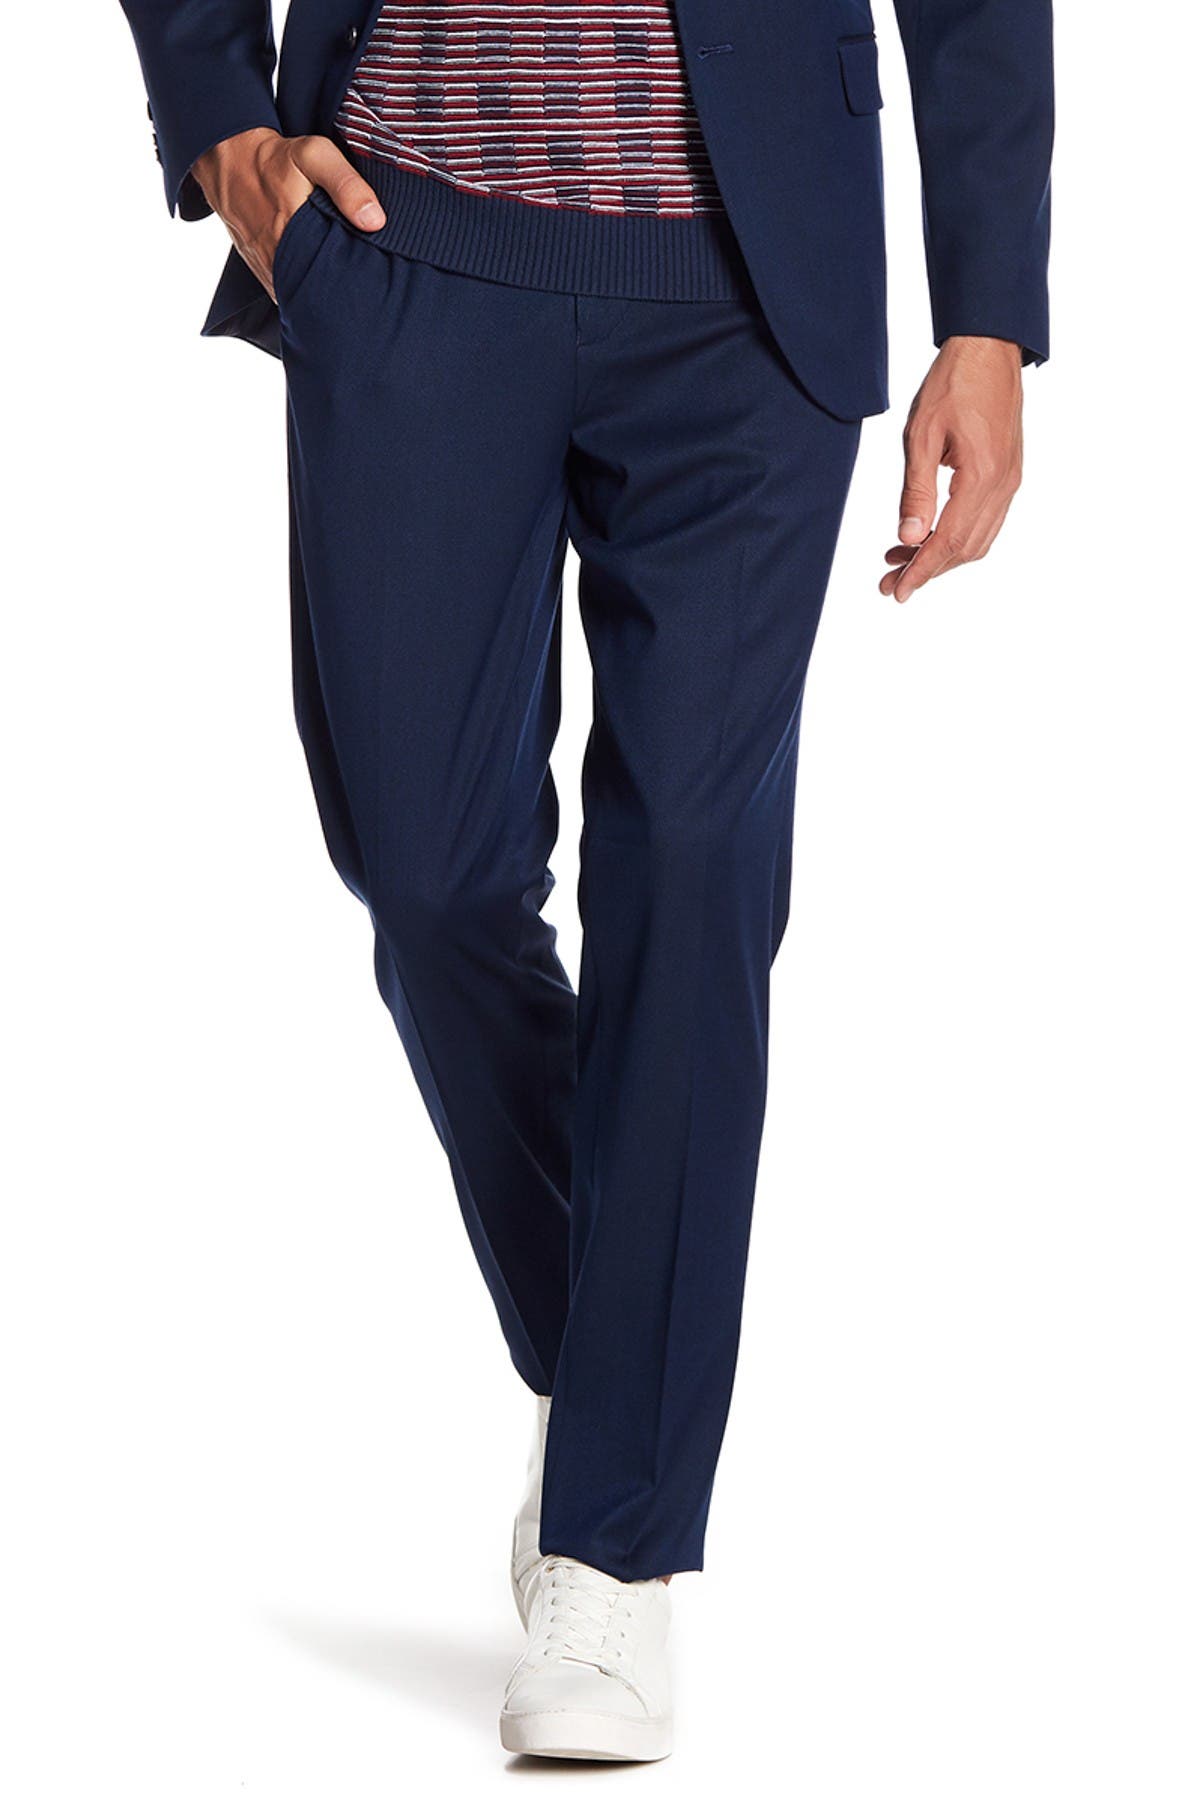 Ben Sherman Blue Birdseye Flat Front Suit Separates Pants